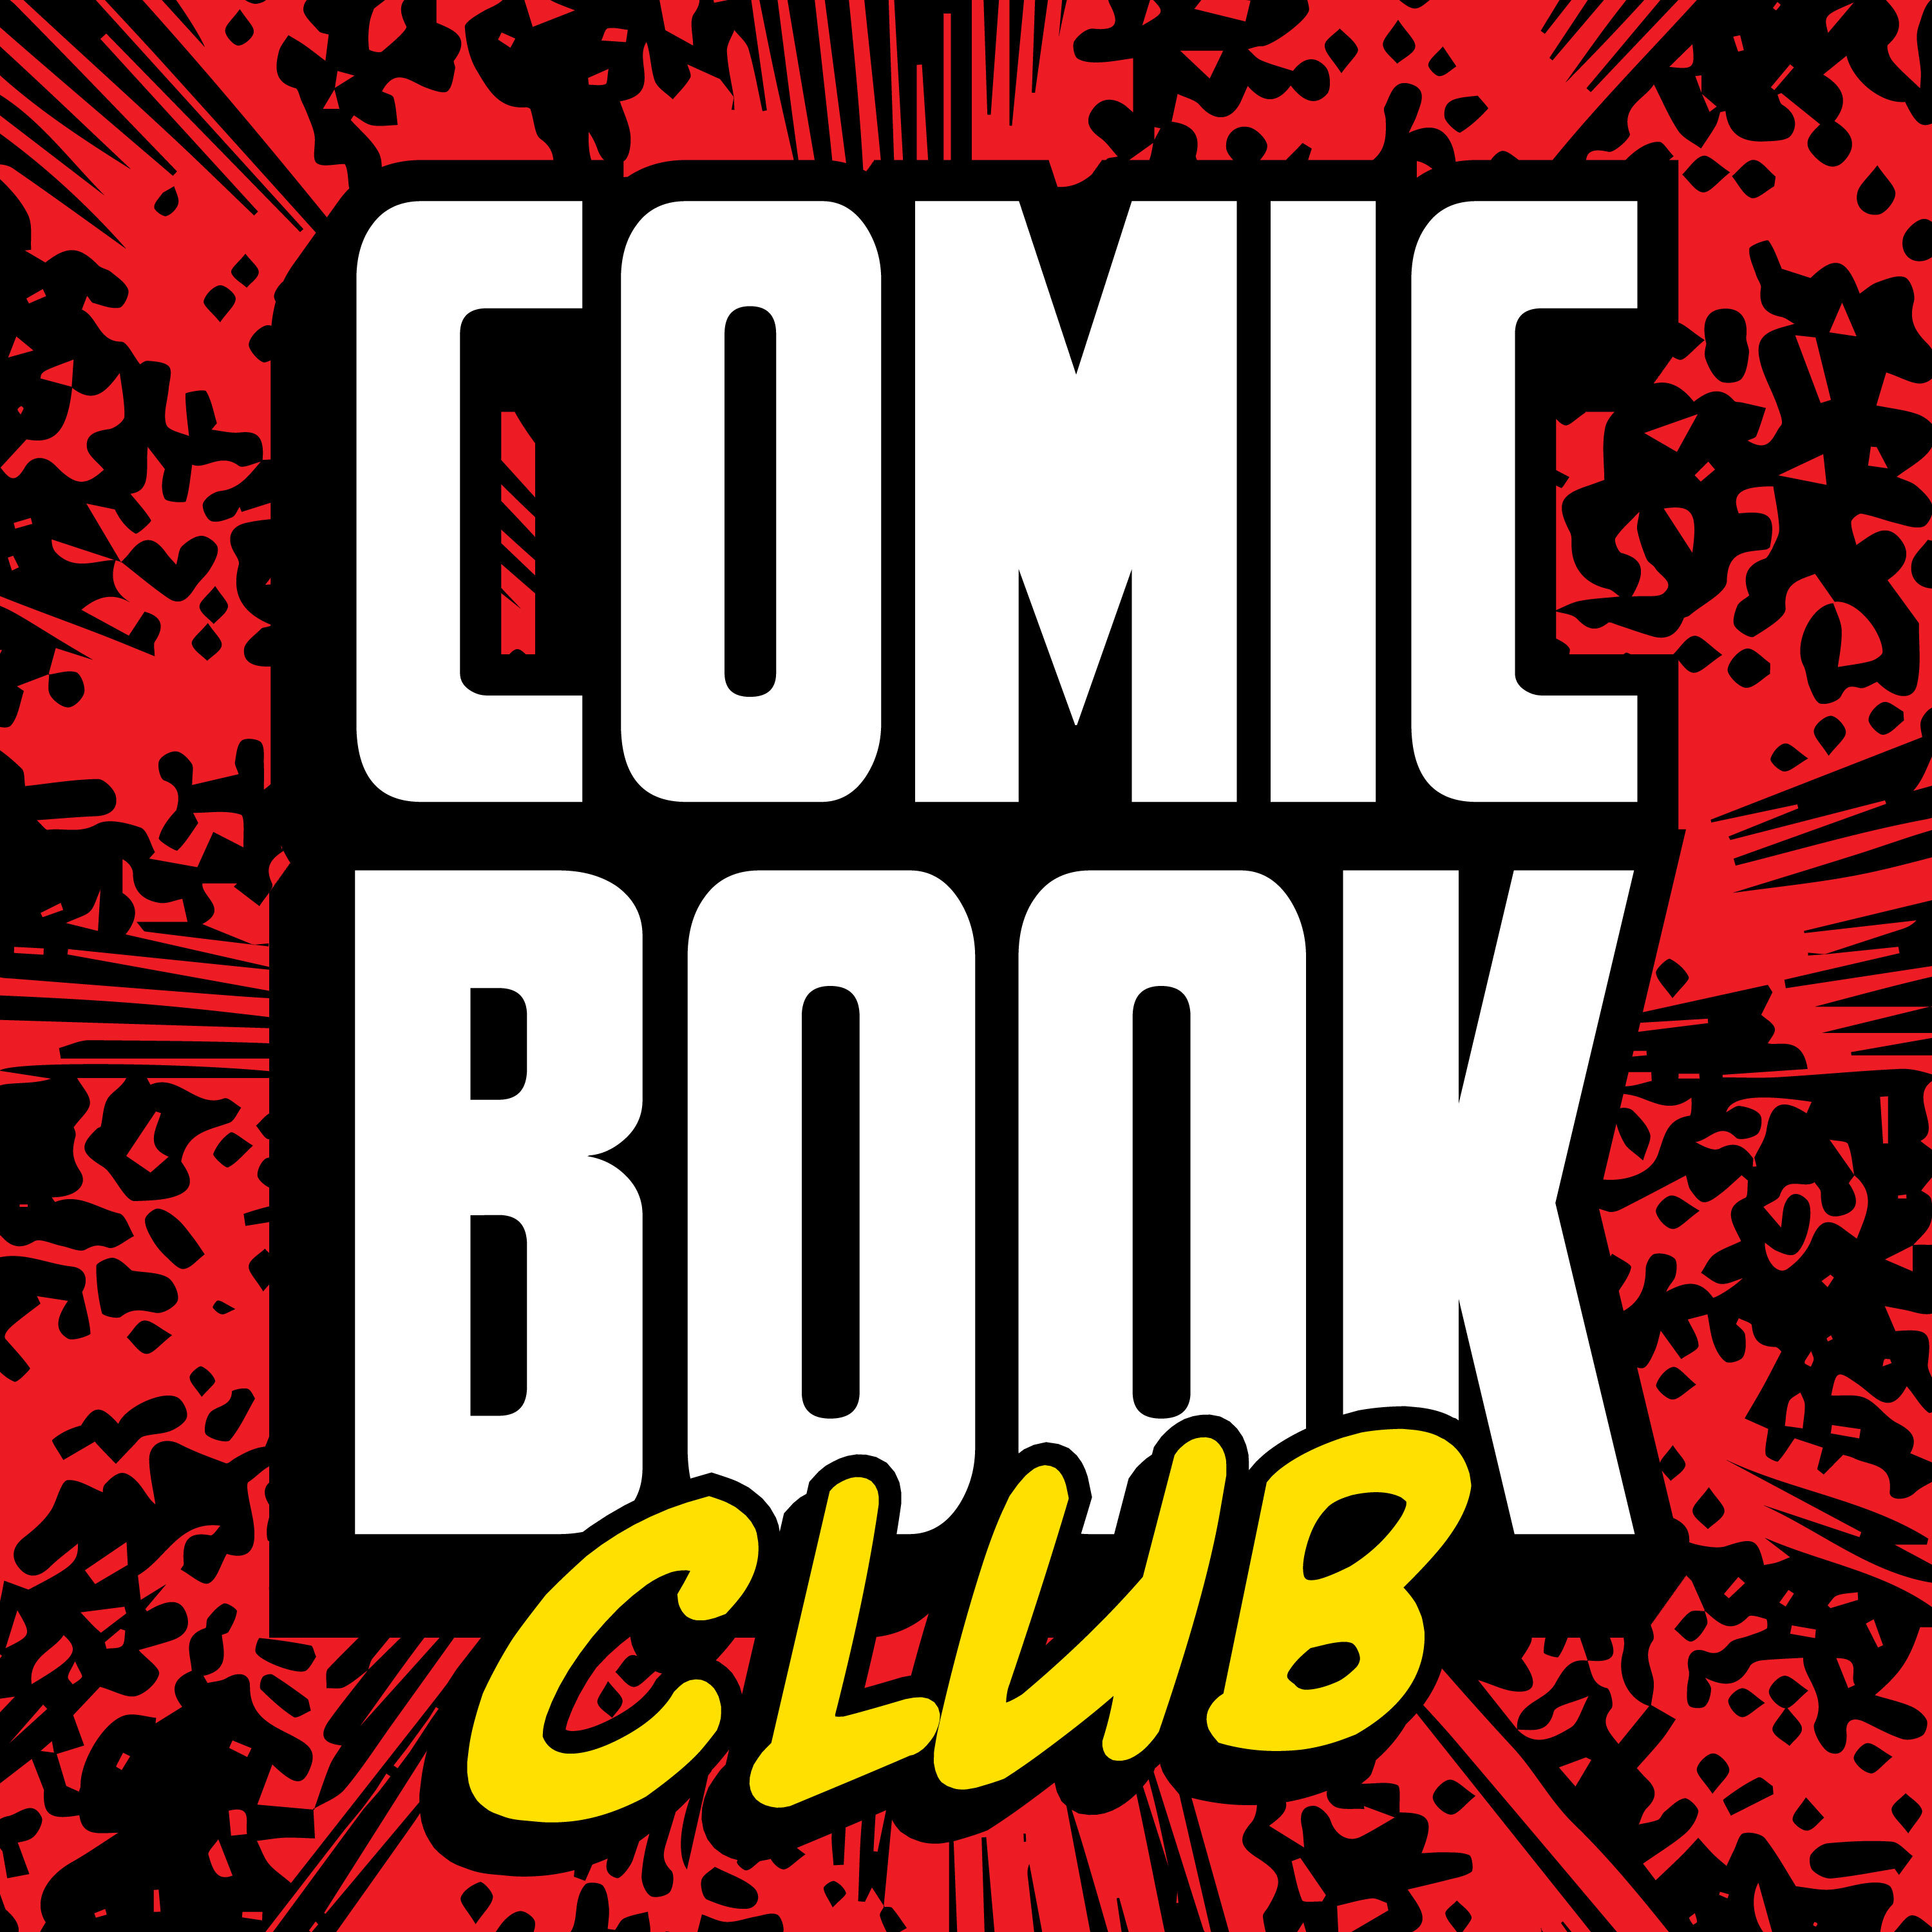 Comic Book Club: Sean Lewis And Jon Westhoff